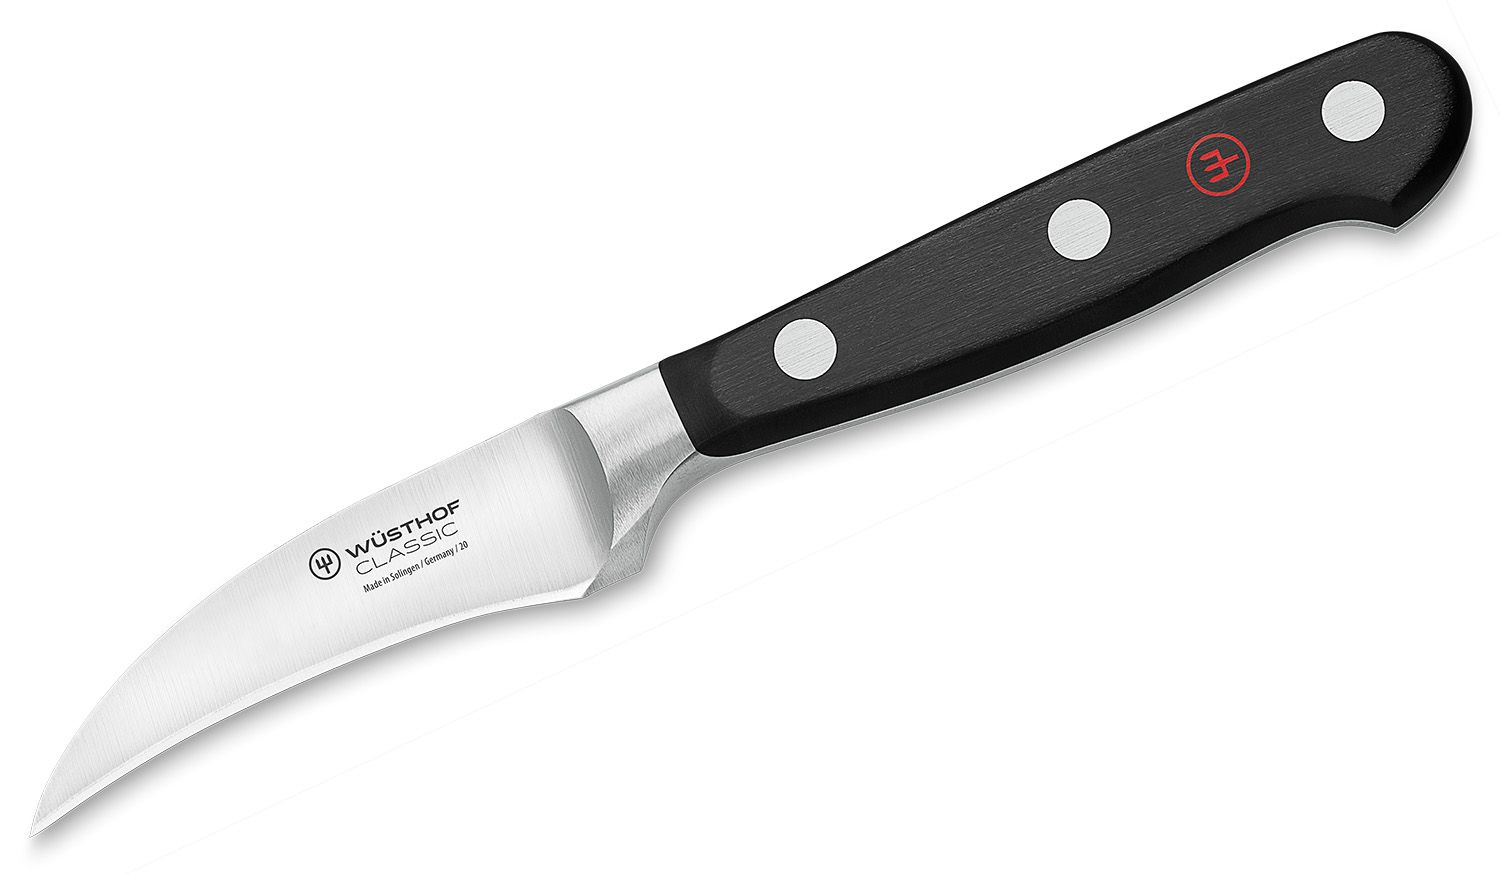 https://pics.knifecenter.com/knifecenter/wusthof-cutlery/images/WU1040102207_1a.jpg